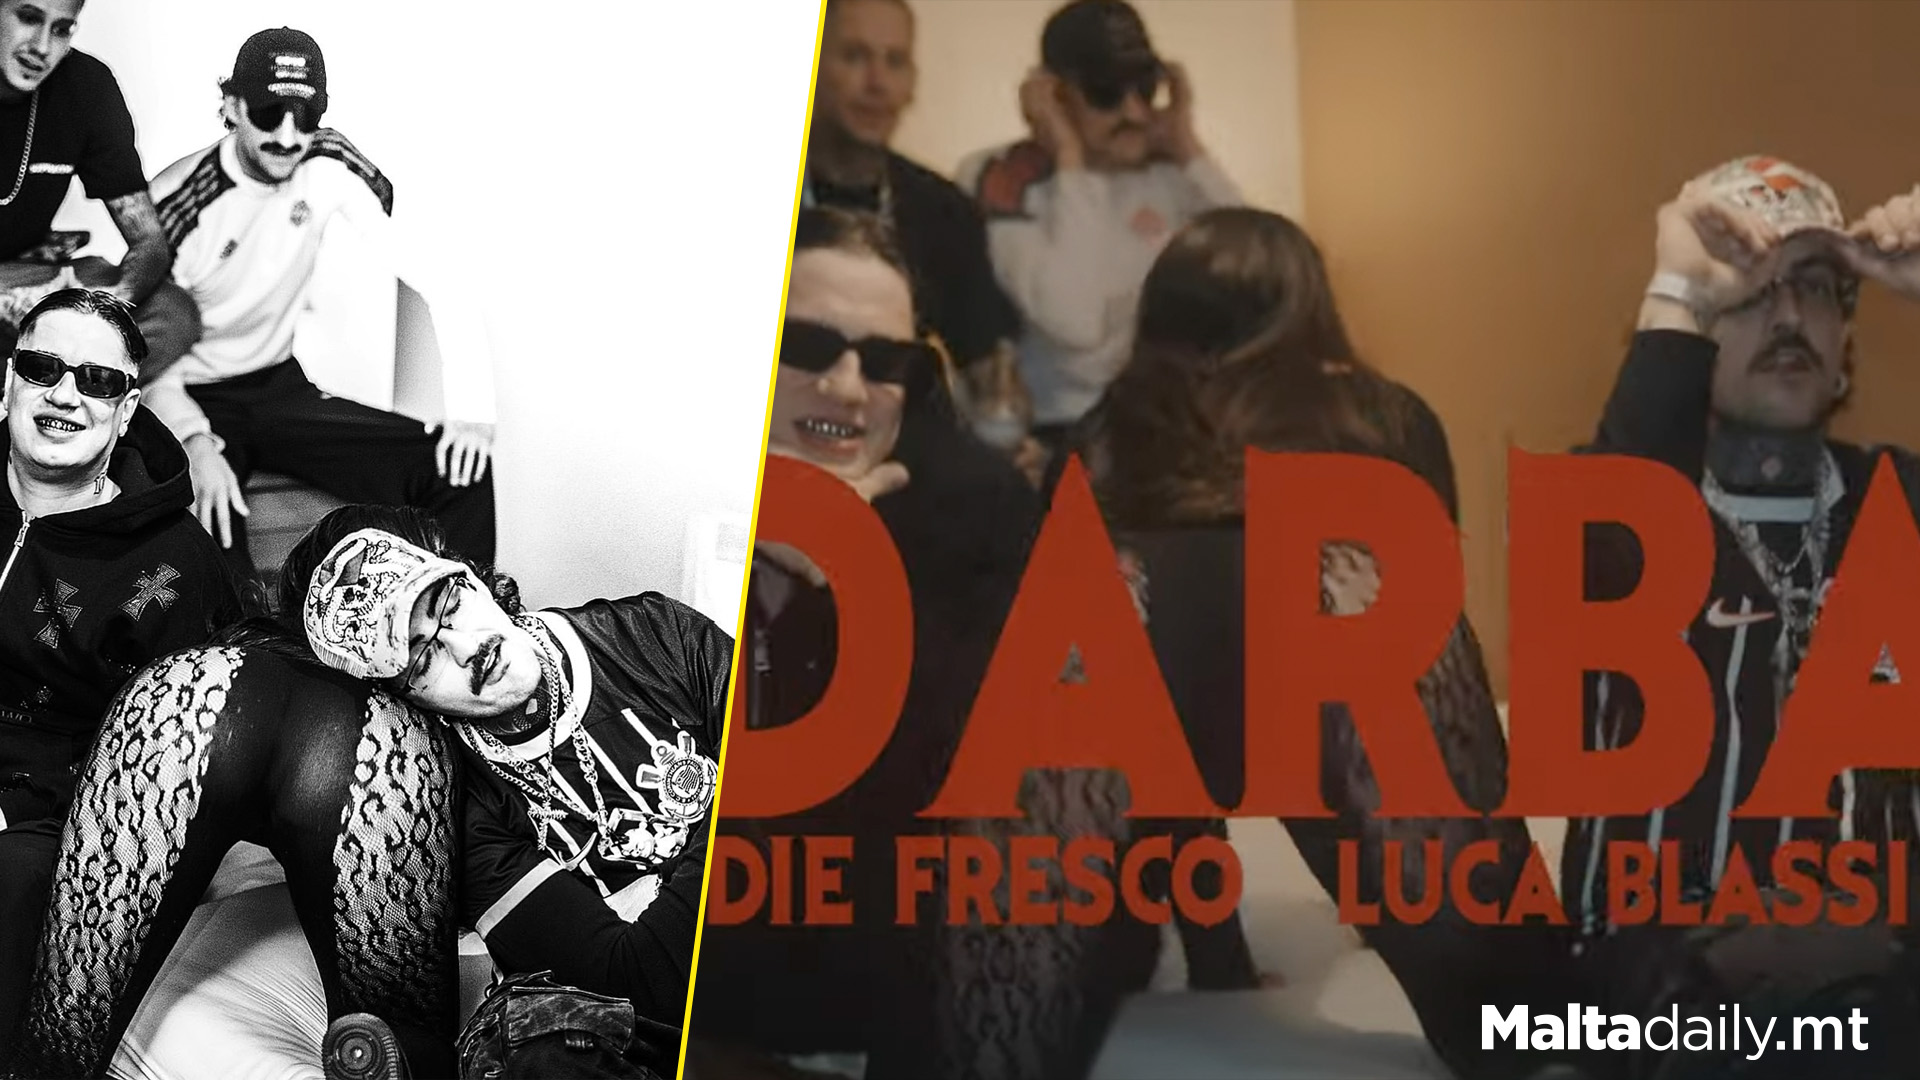 Eddie Fresco Collabs With Slovak Rapper On New Track ‘DARBA’